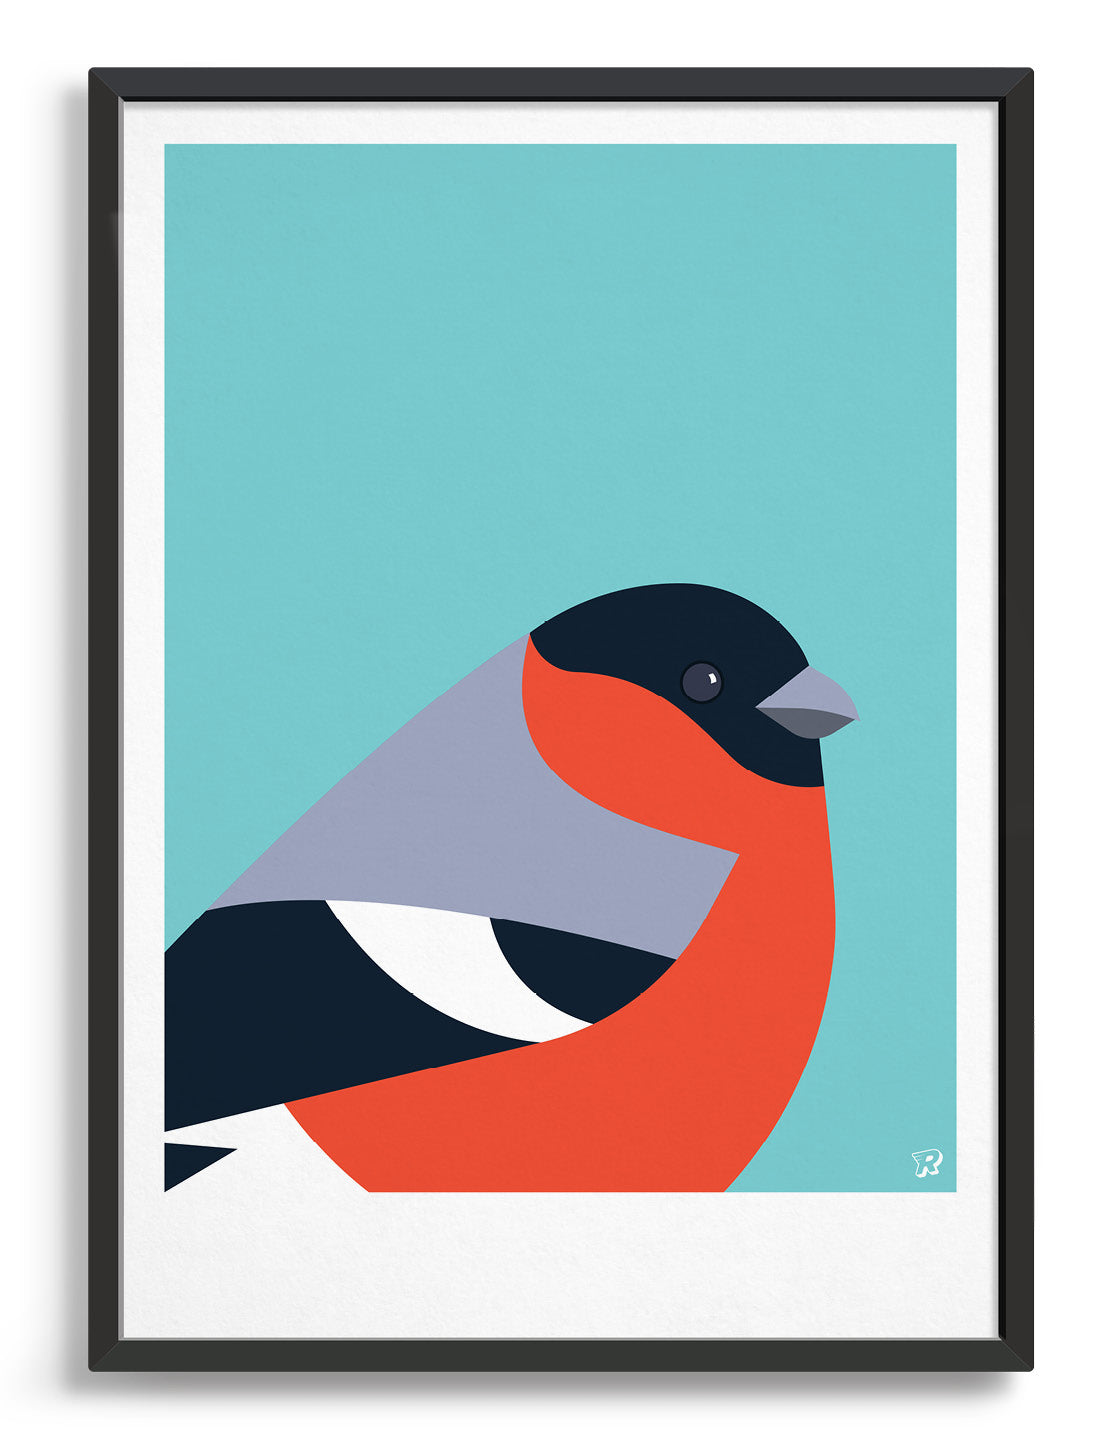 Modern art print with a bullfinch bird in black, grey and orange against a blue aqua background